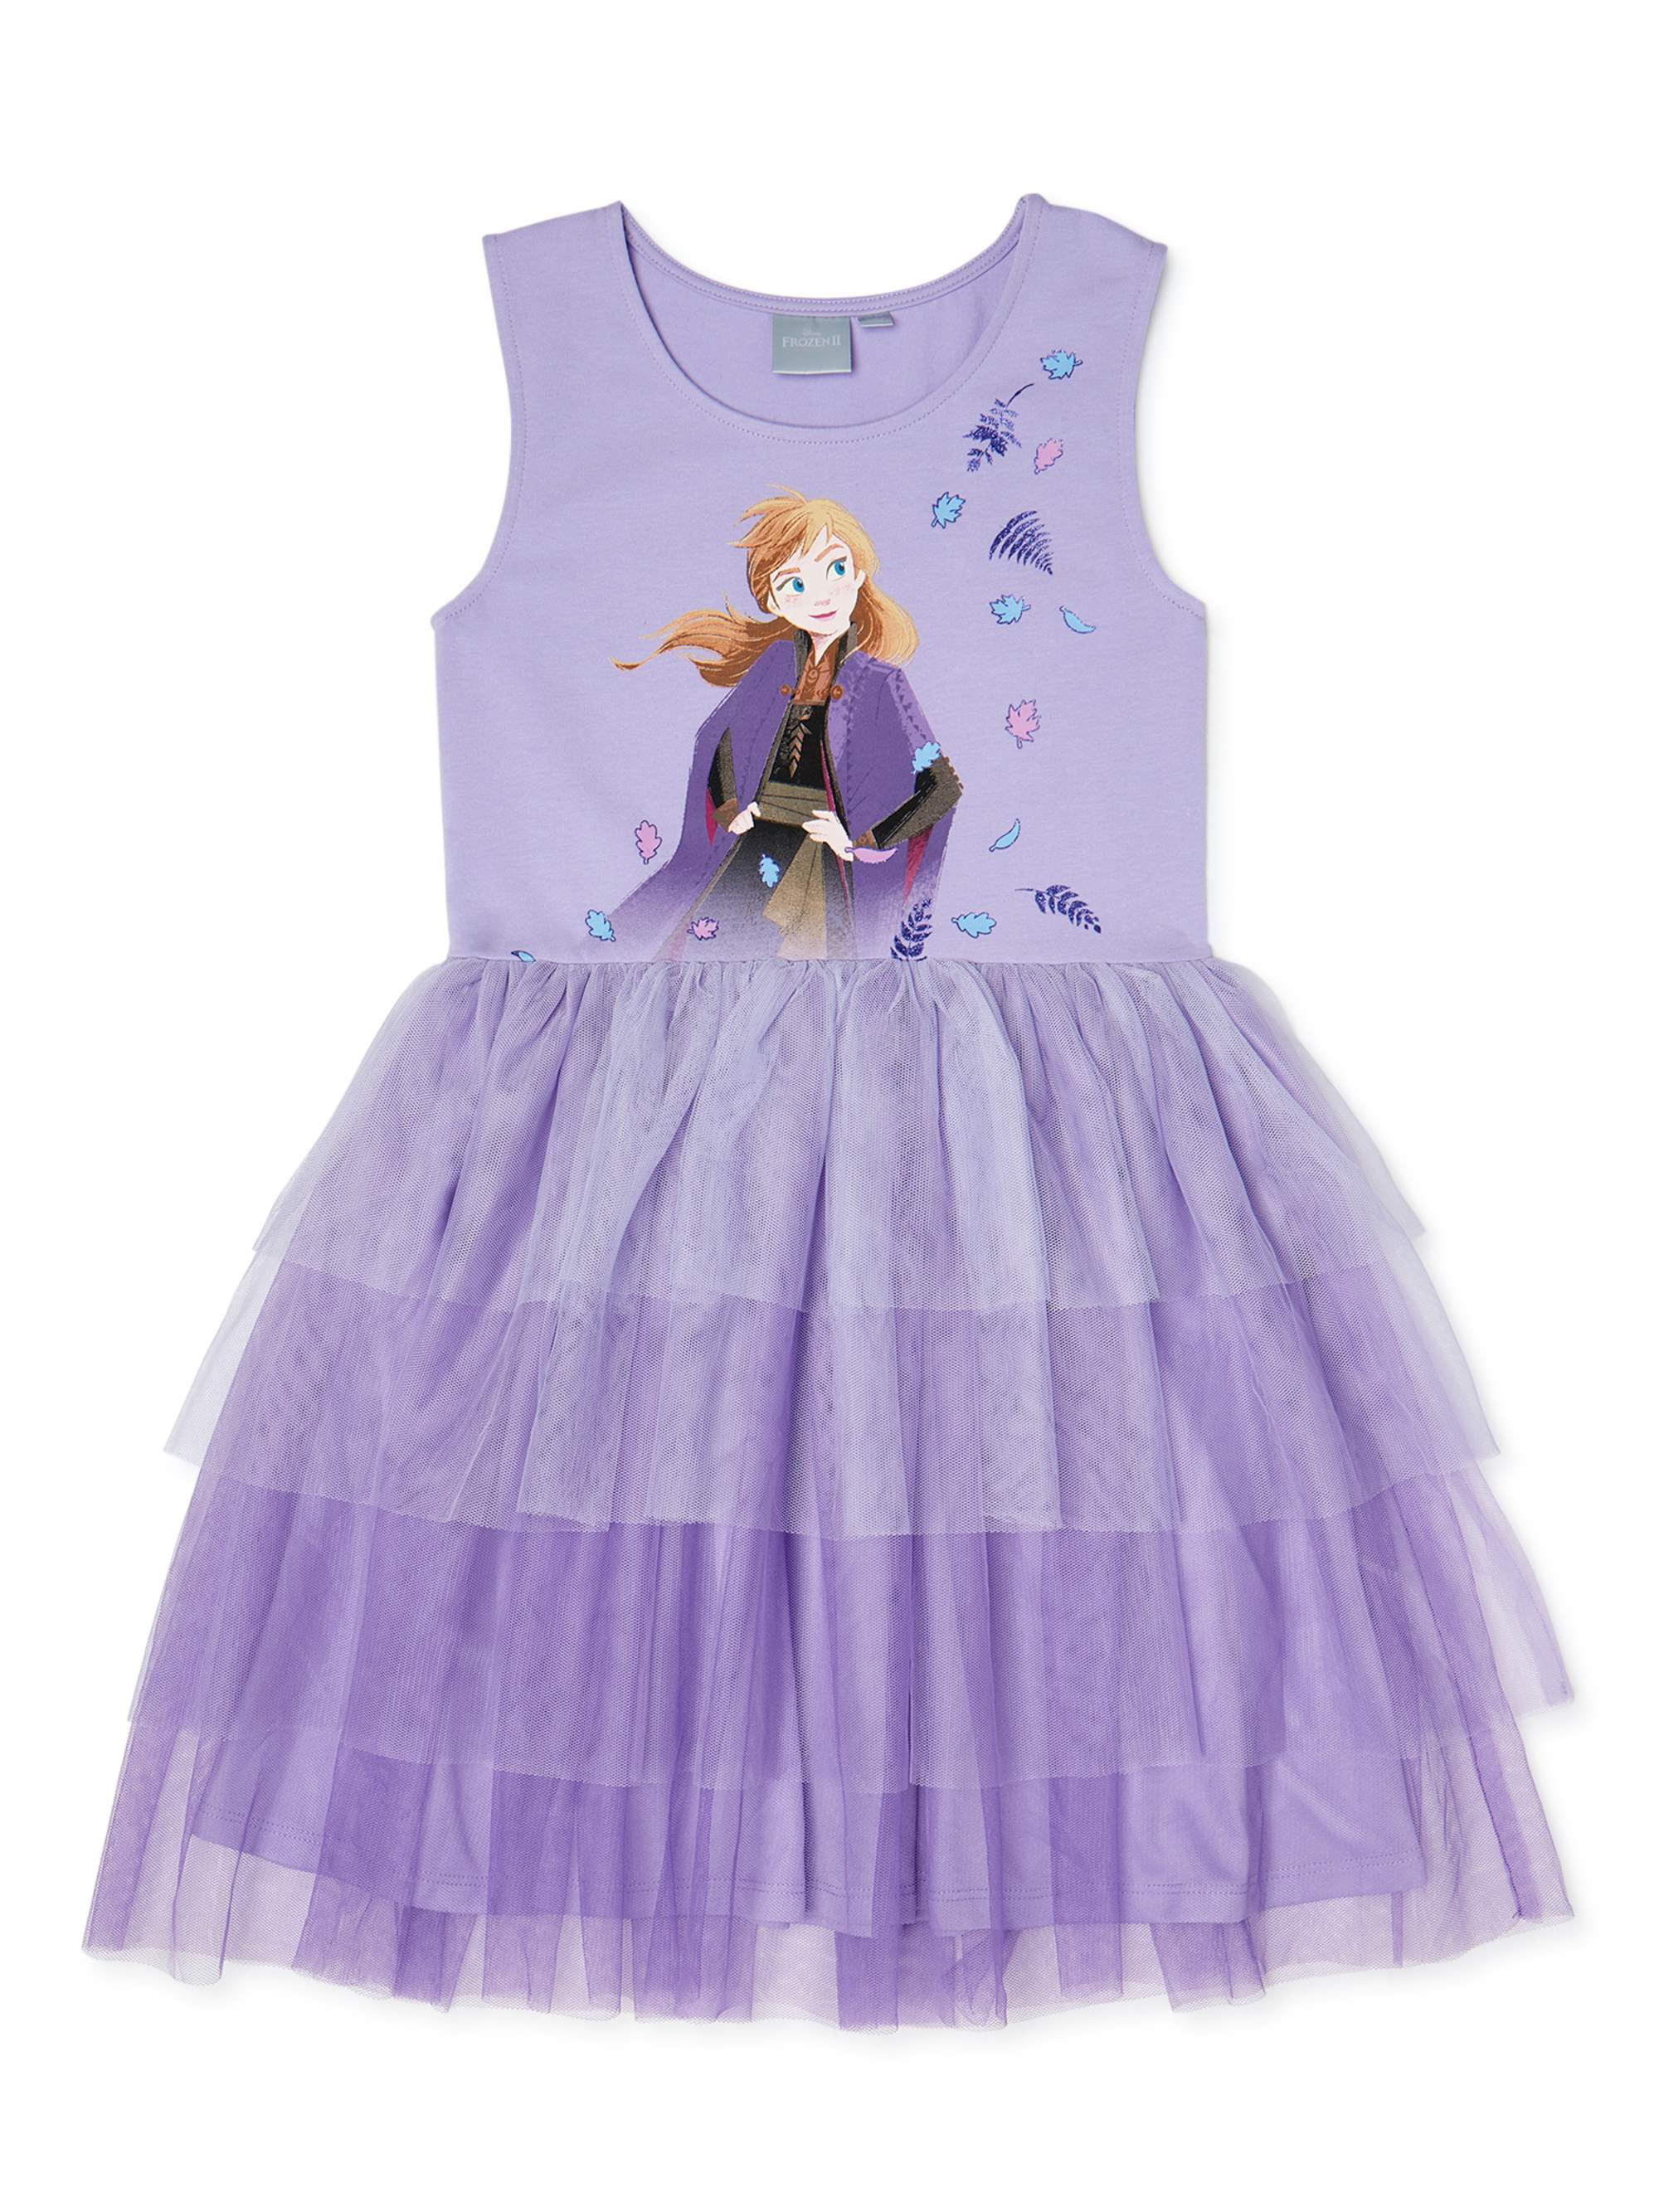 Disney Princess Sofia the First DRESS & TIARA SET Fits sizes 4-6X ~ NEW IN BOX 